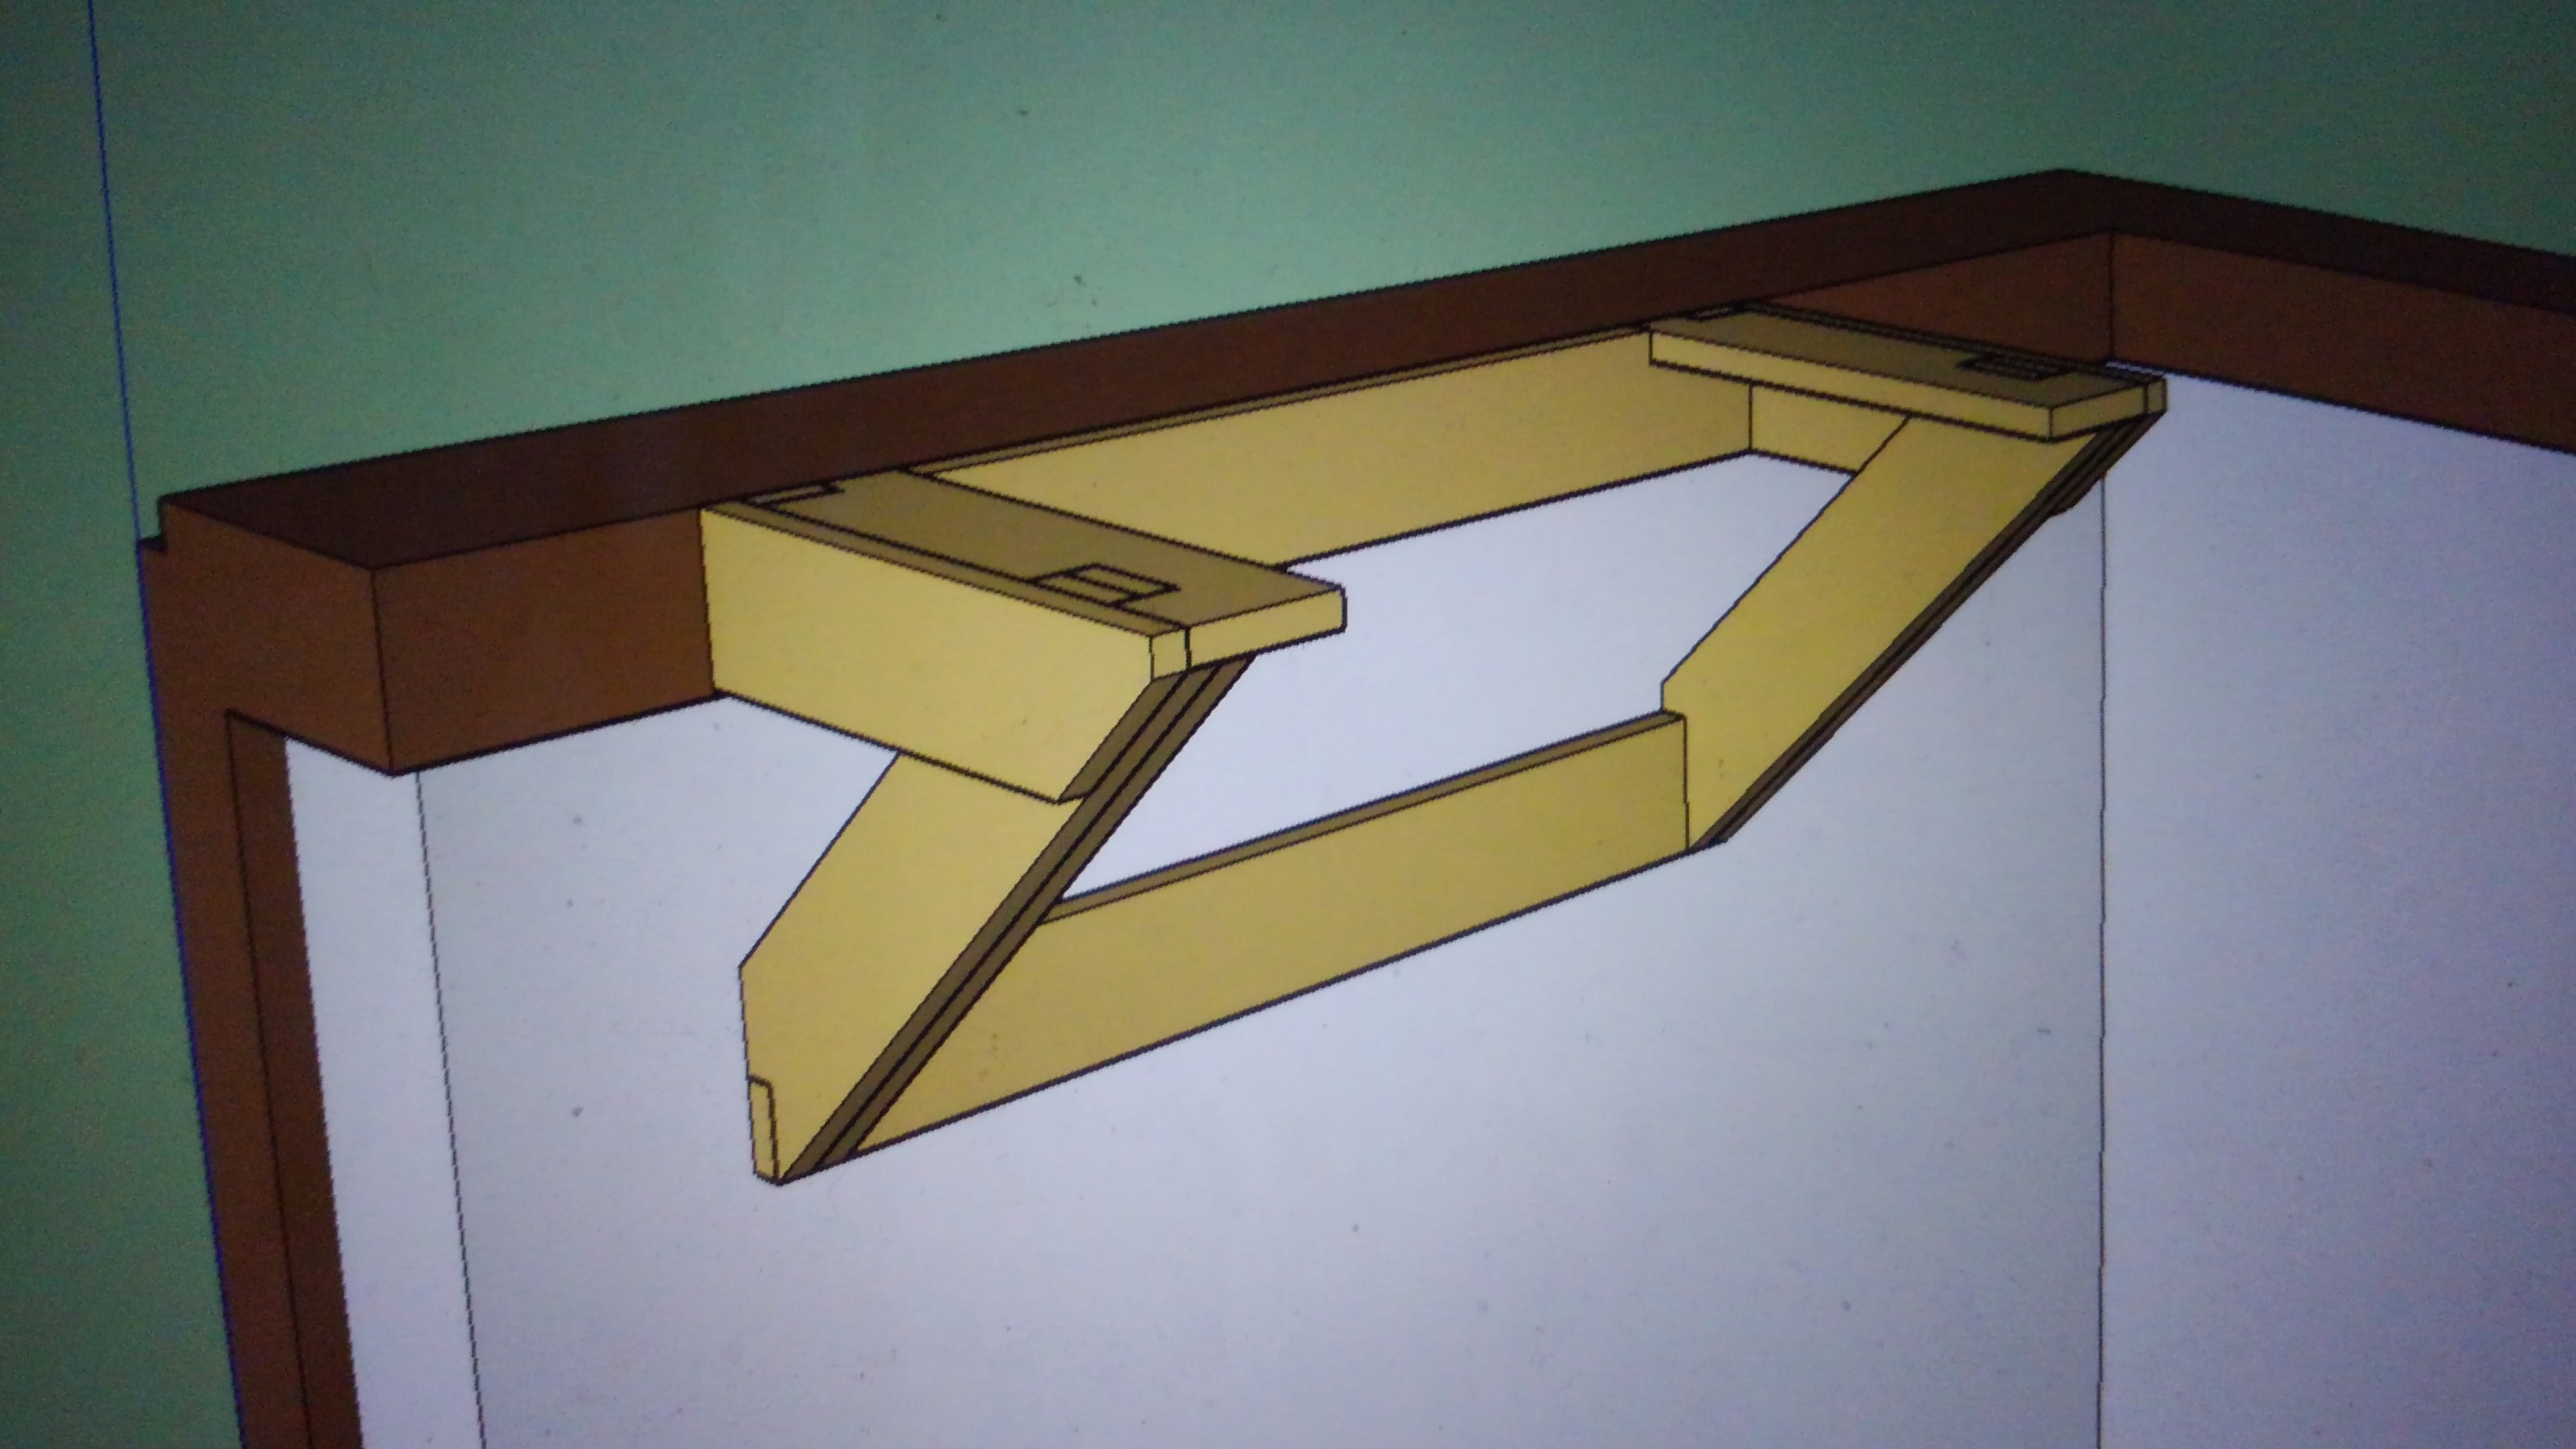 A 3D model of a triangle frame shelf